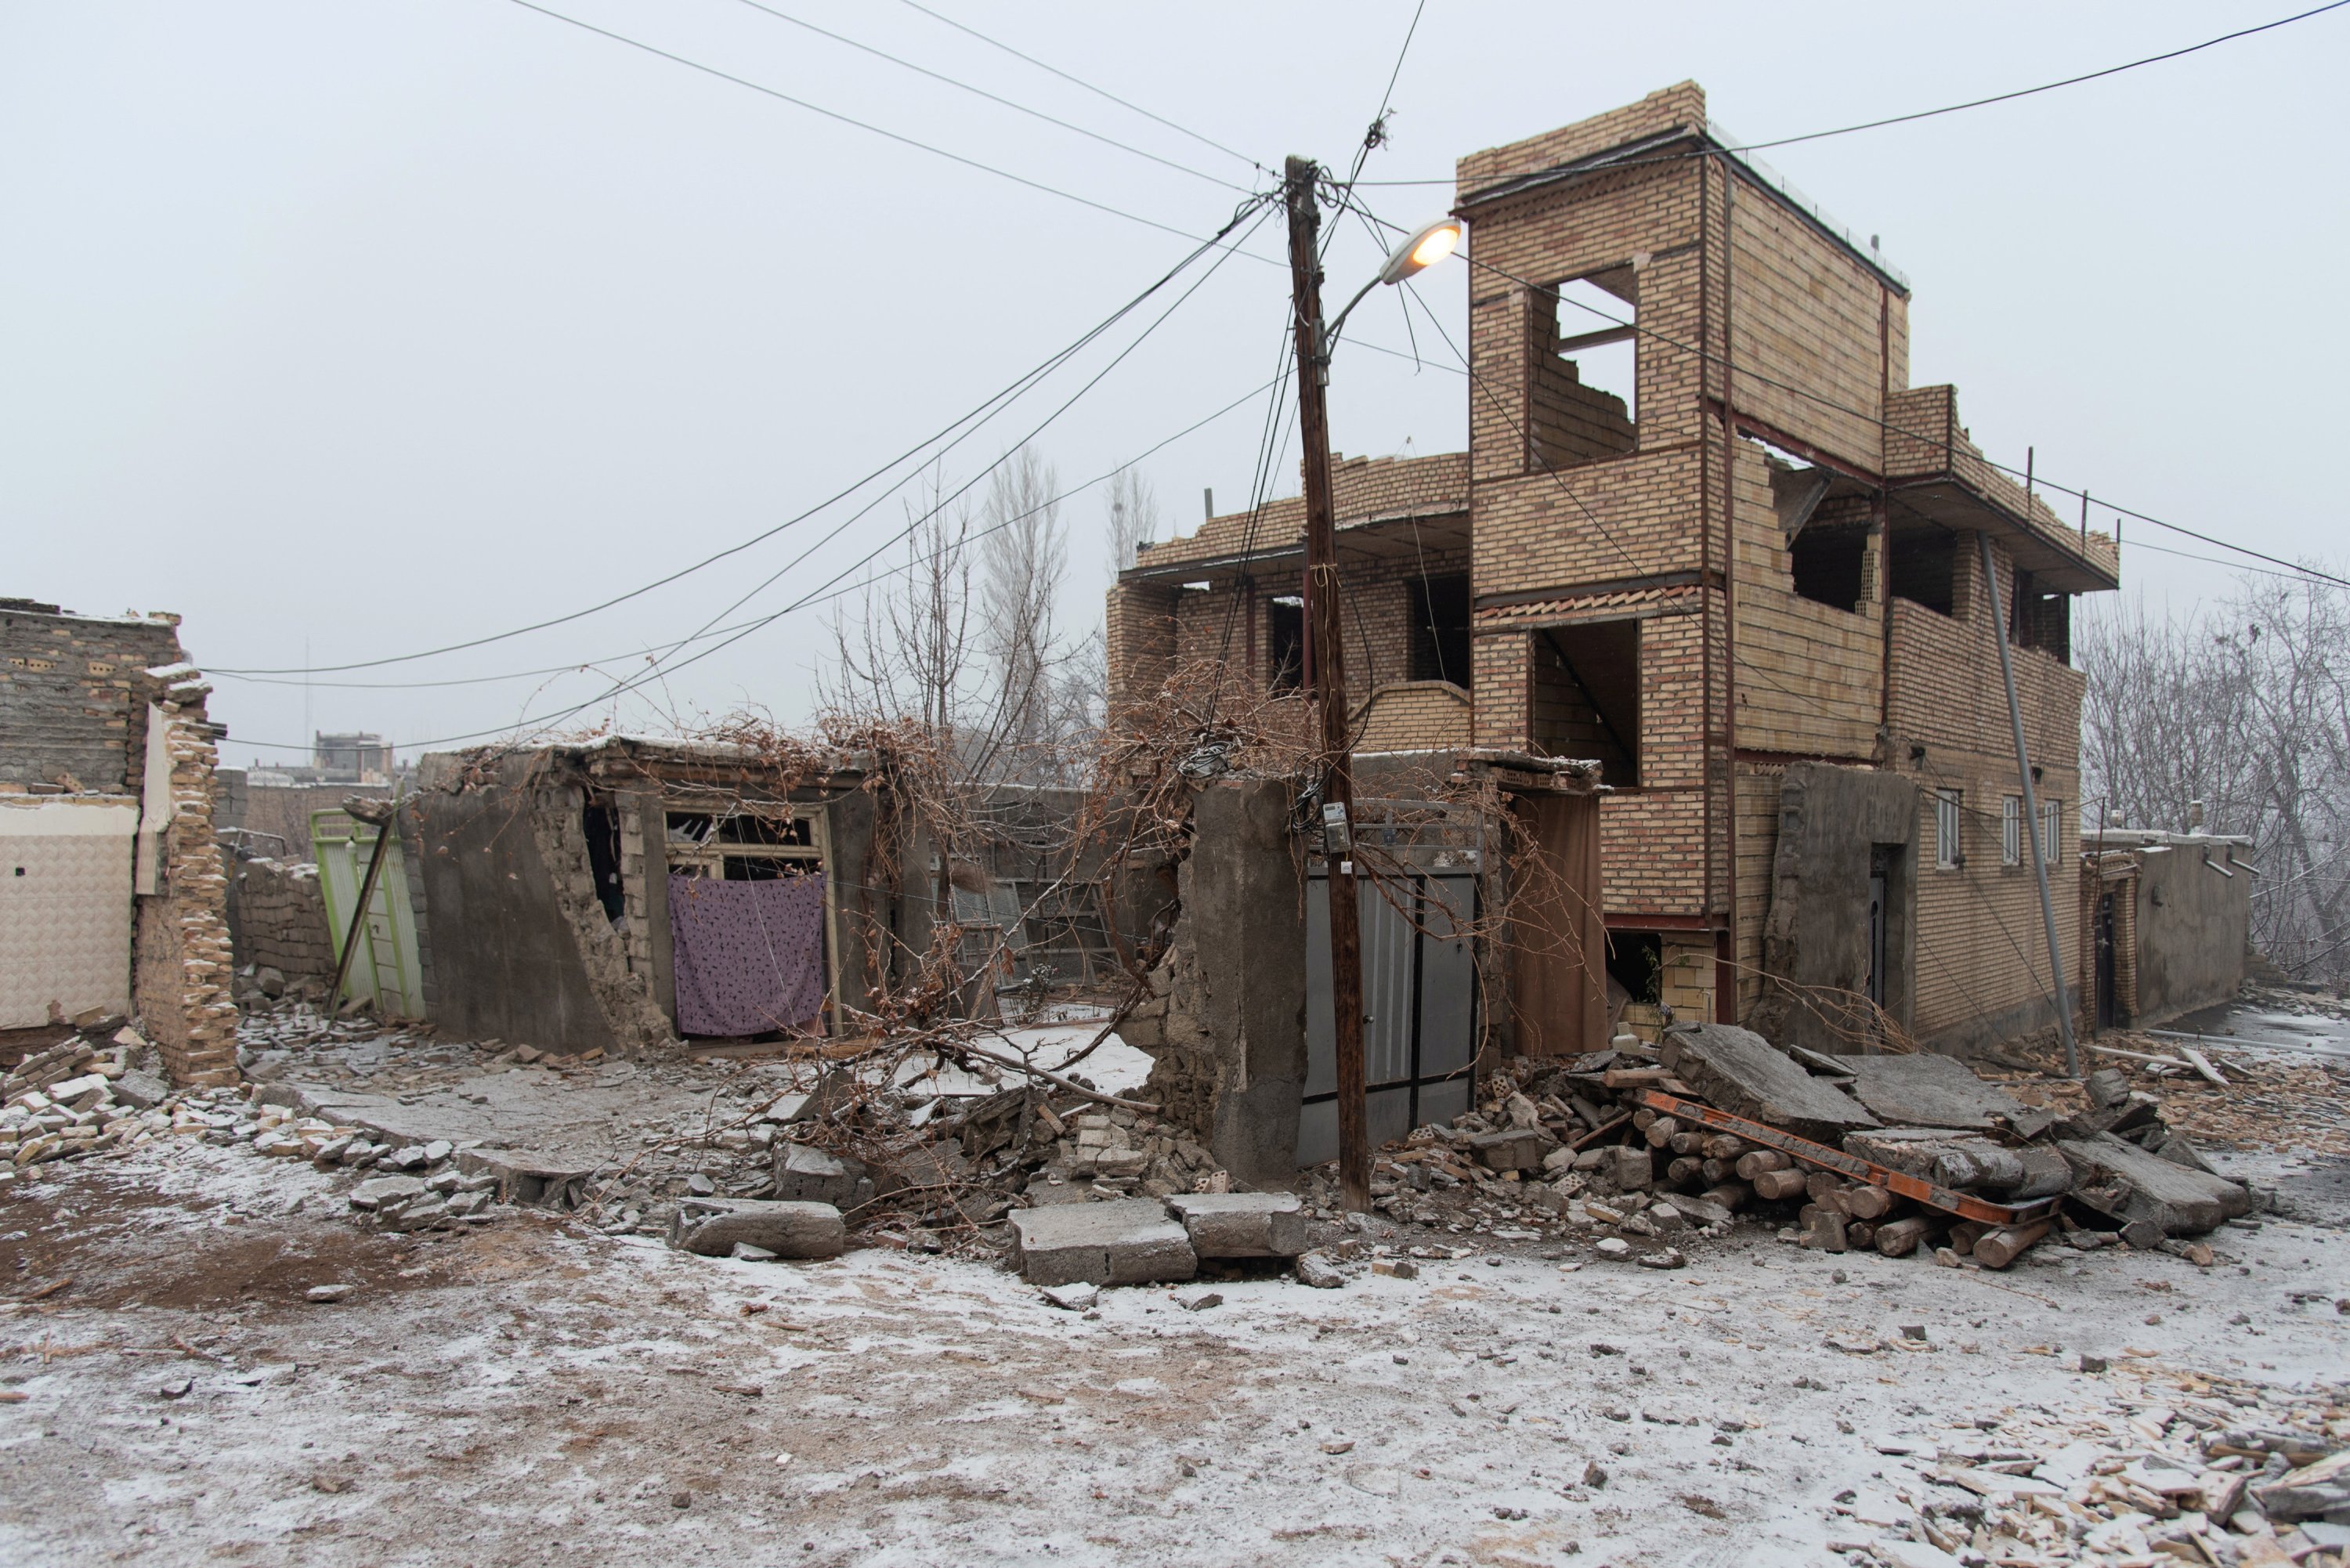 Pandangan umum menunjukkan kehancuran setelah gempa bumi di wilayah Khoy Azerbaijan Barat, Iran, 29 Januari 2023. (Foto Reuters)